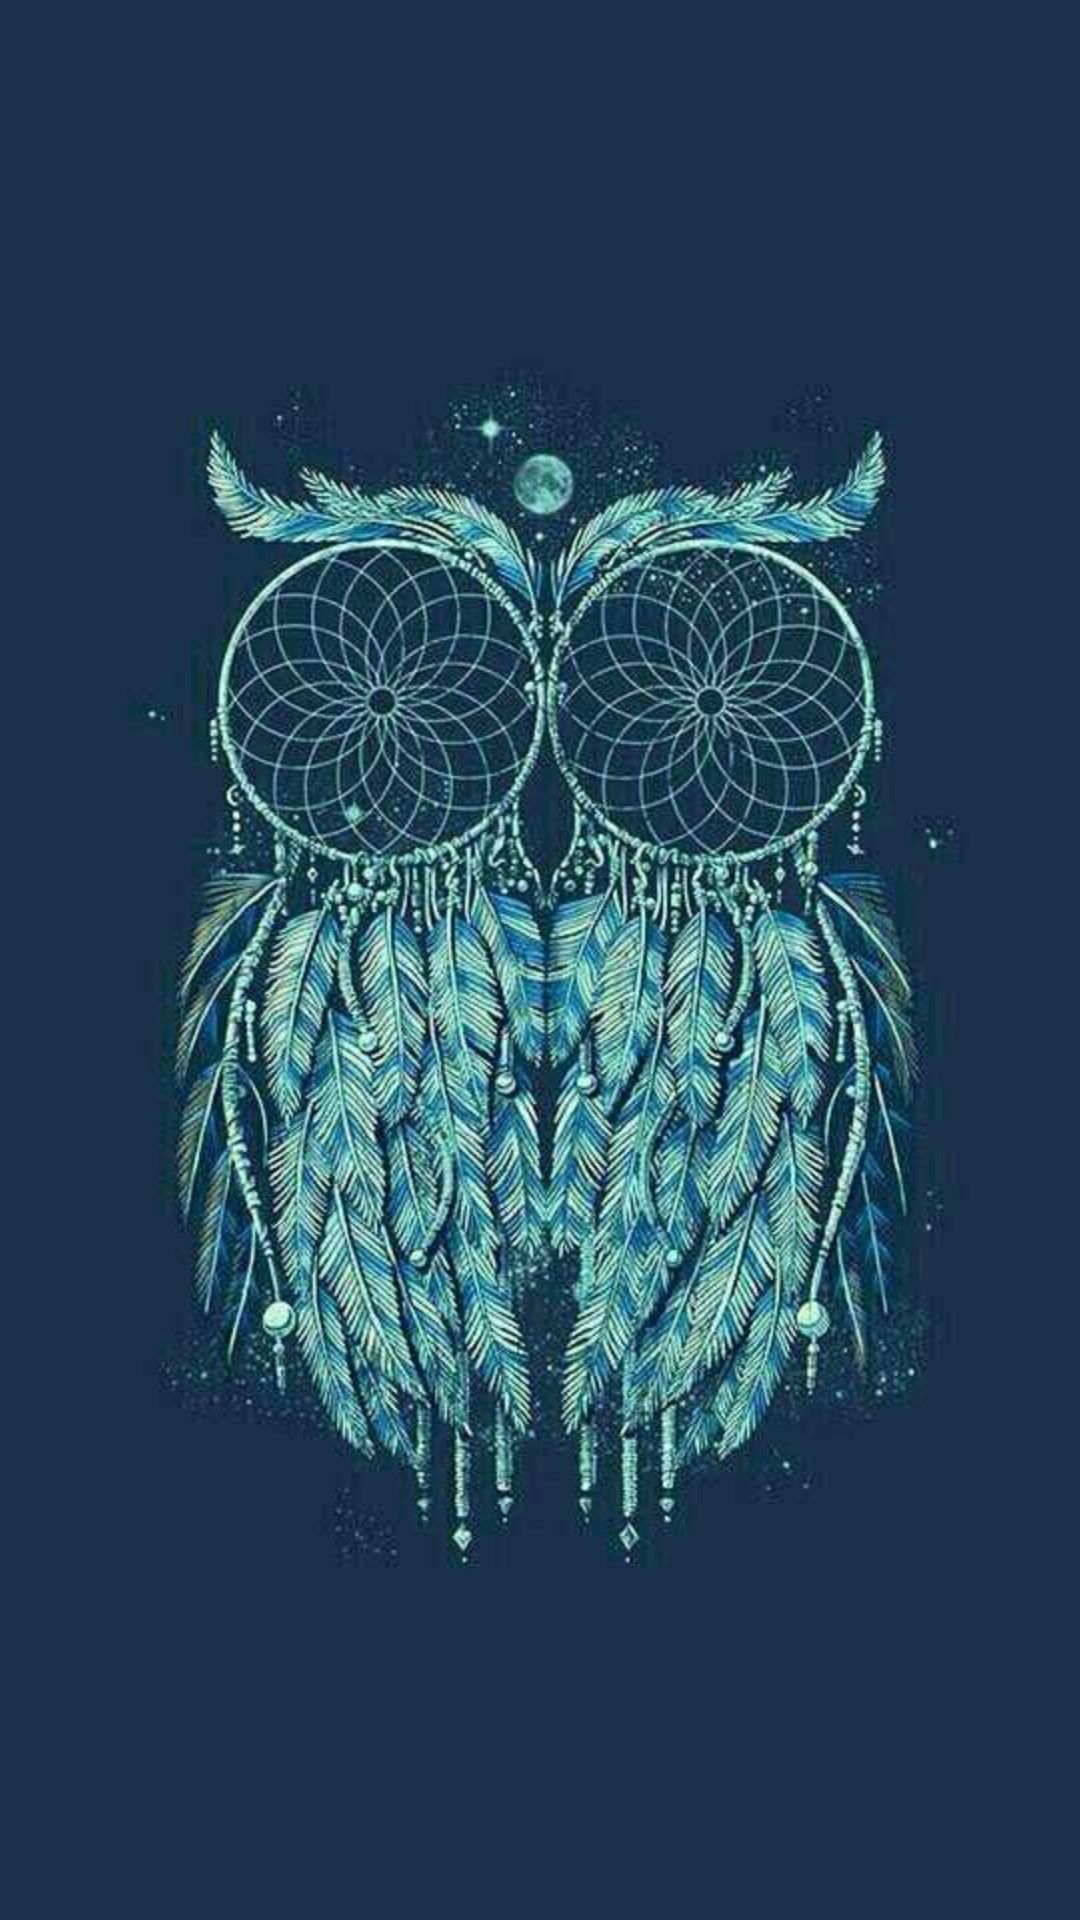 Owl Wallpaper Images